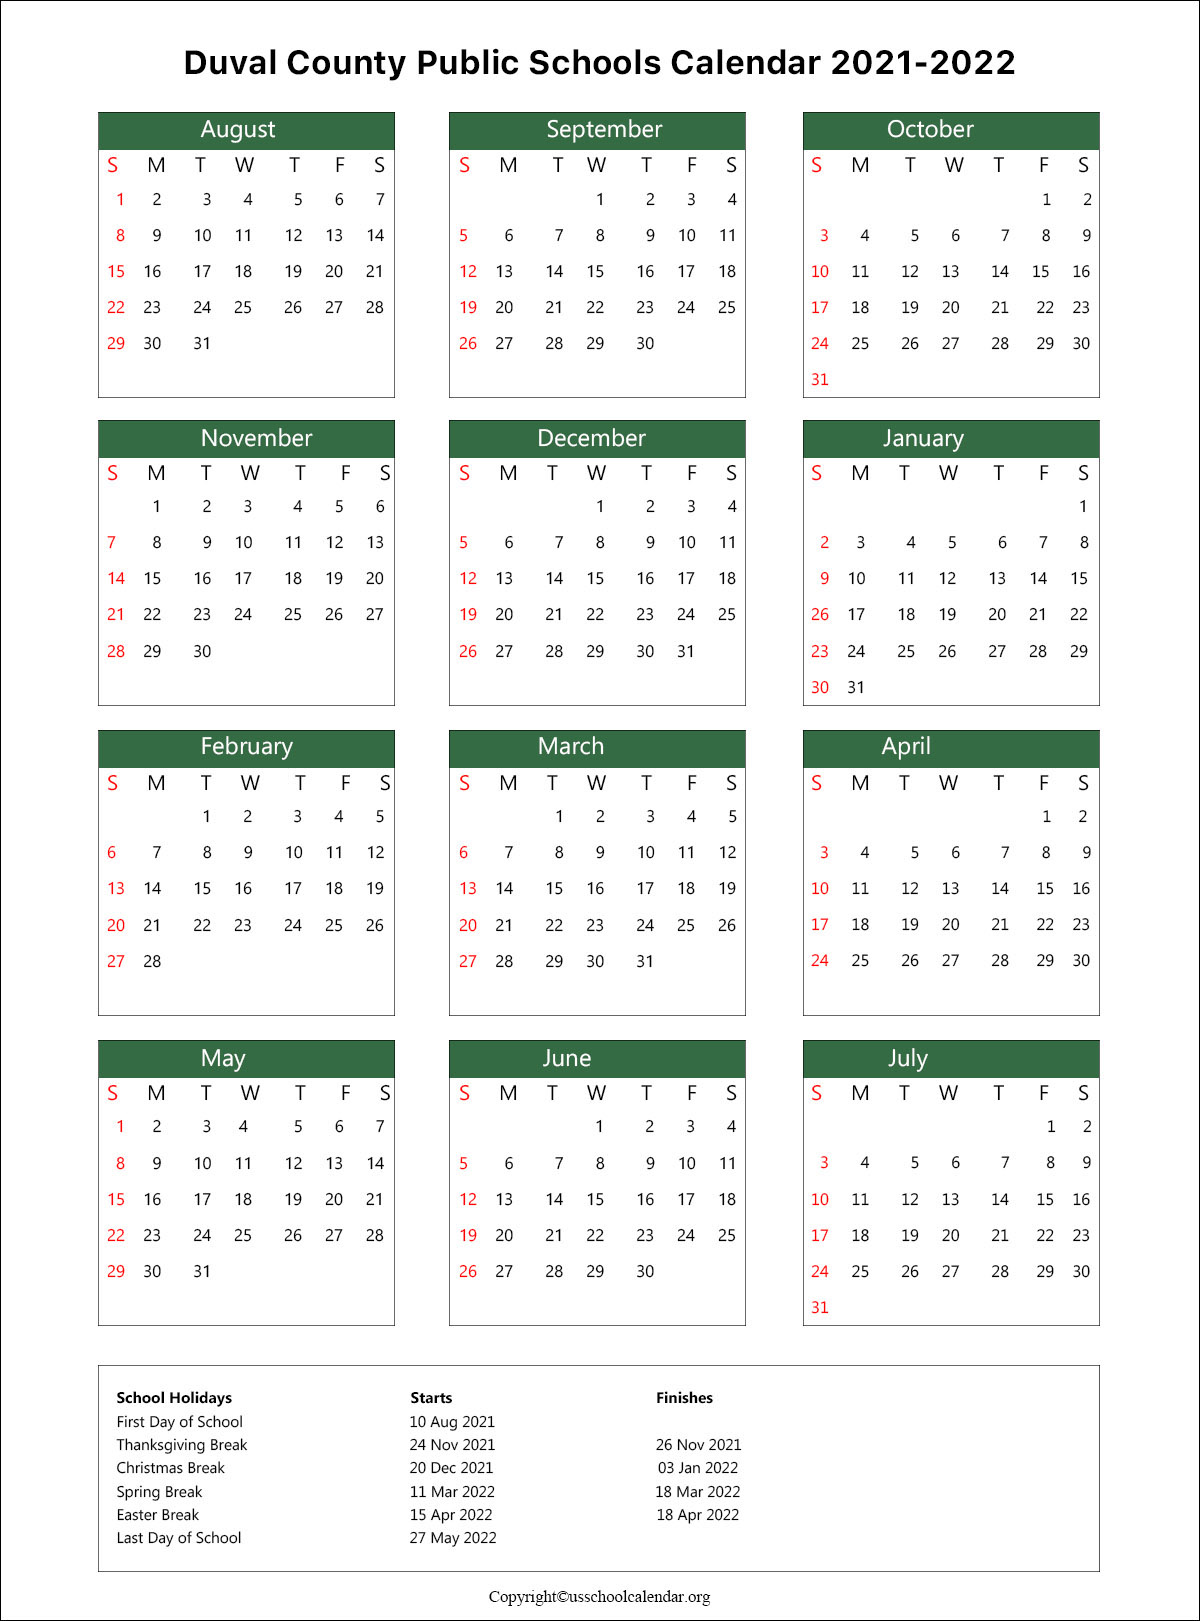 Duval County School Calendar with Holidays 2021-2022